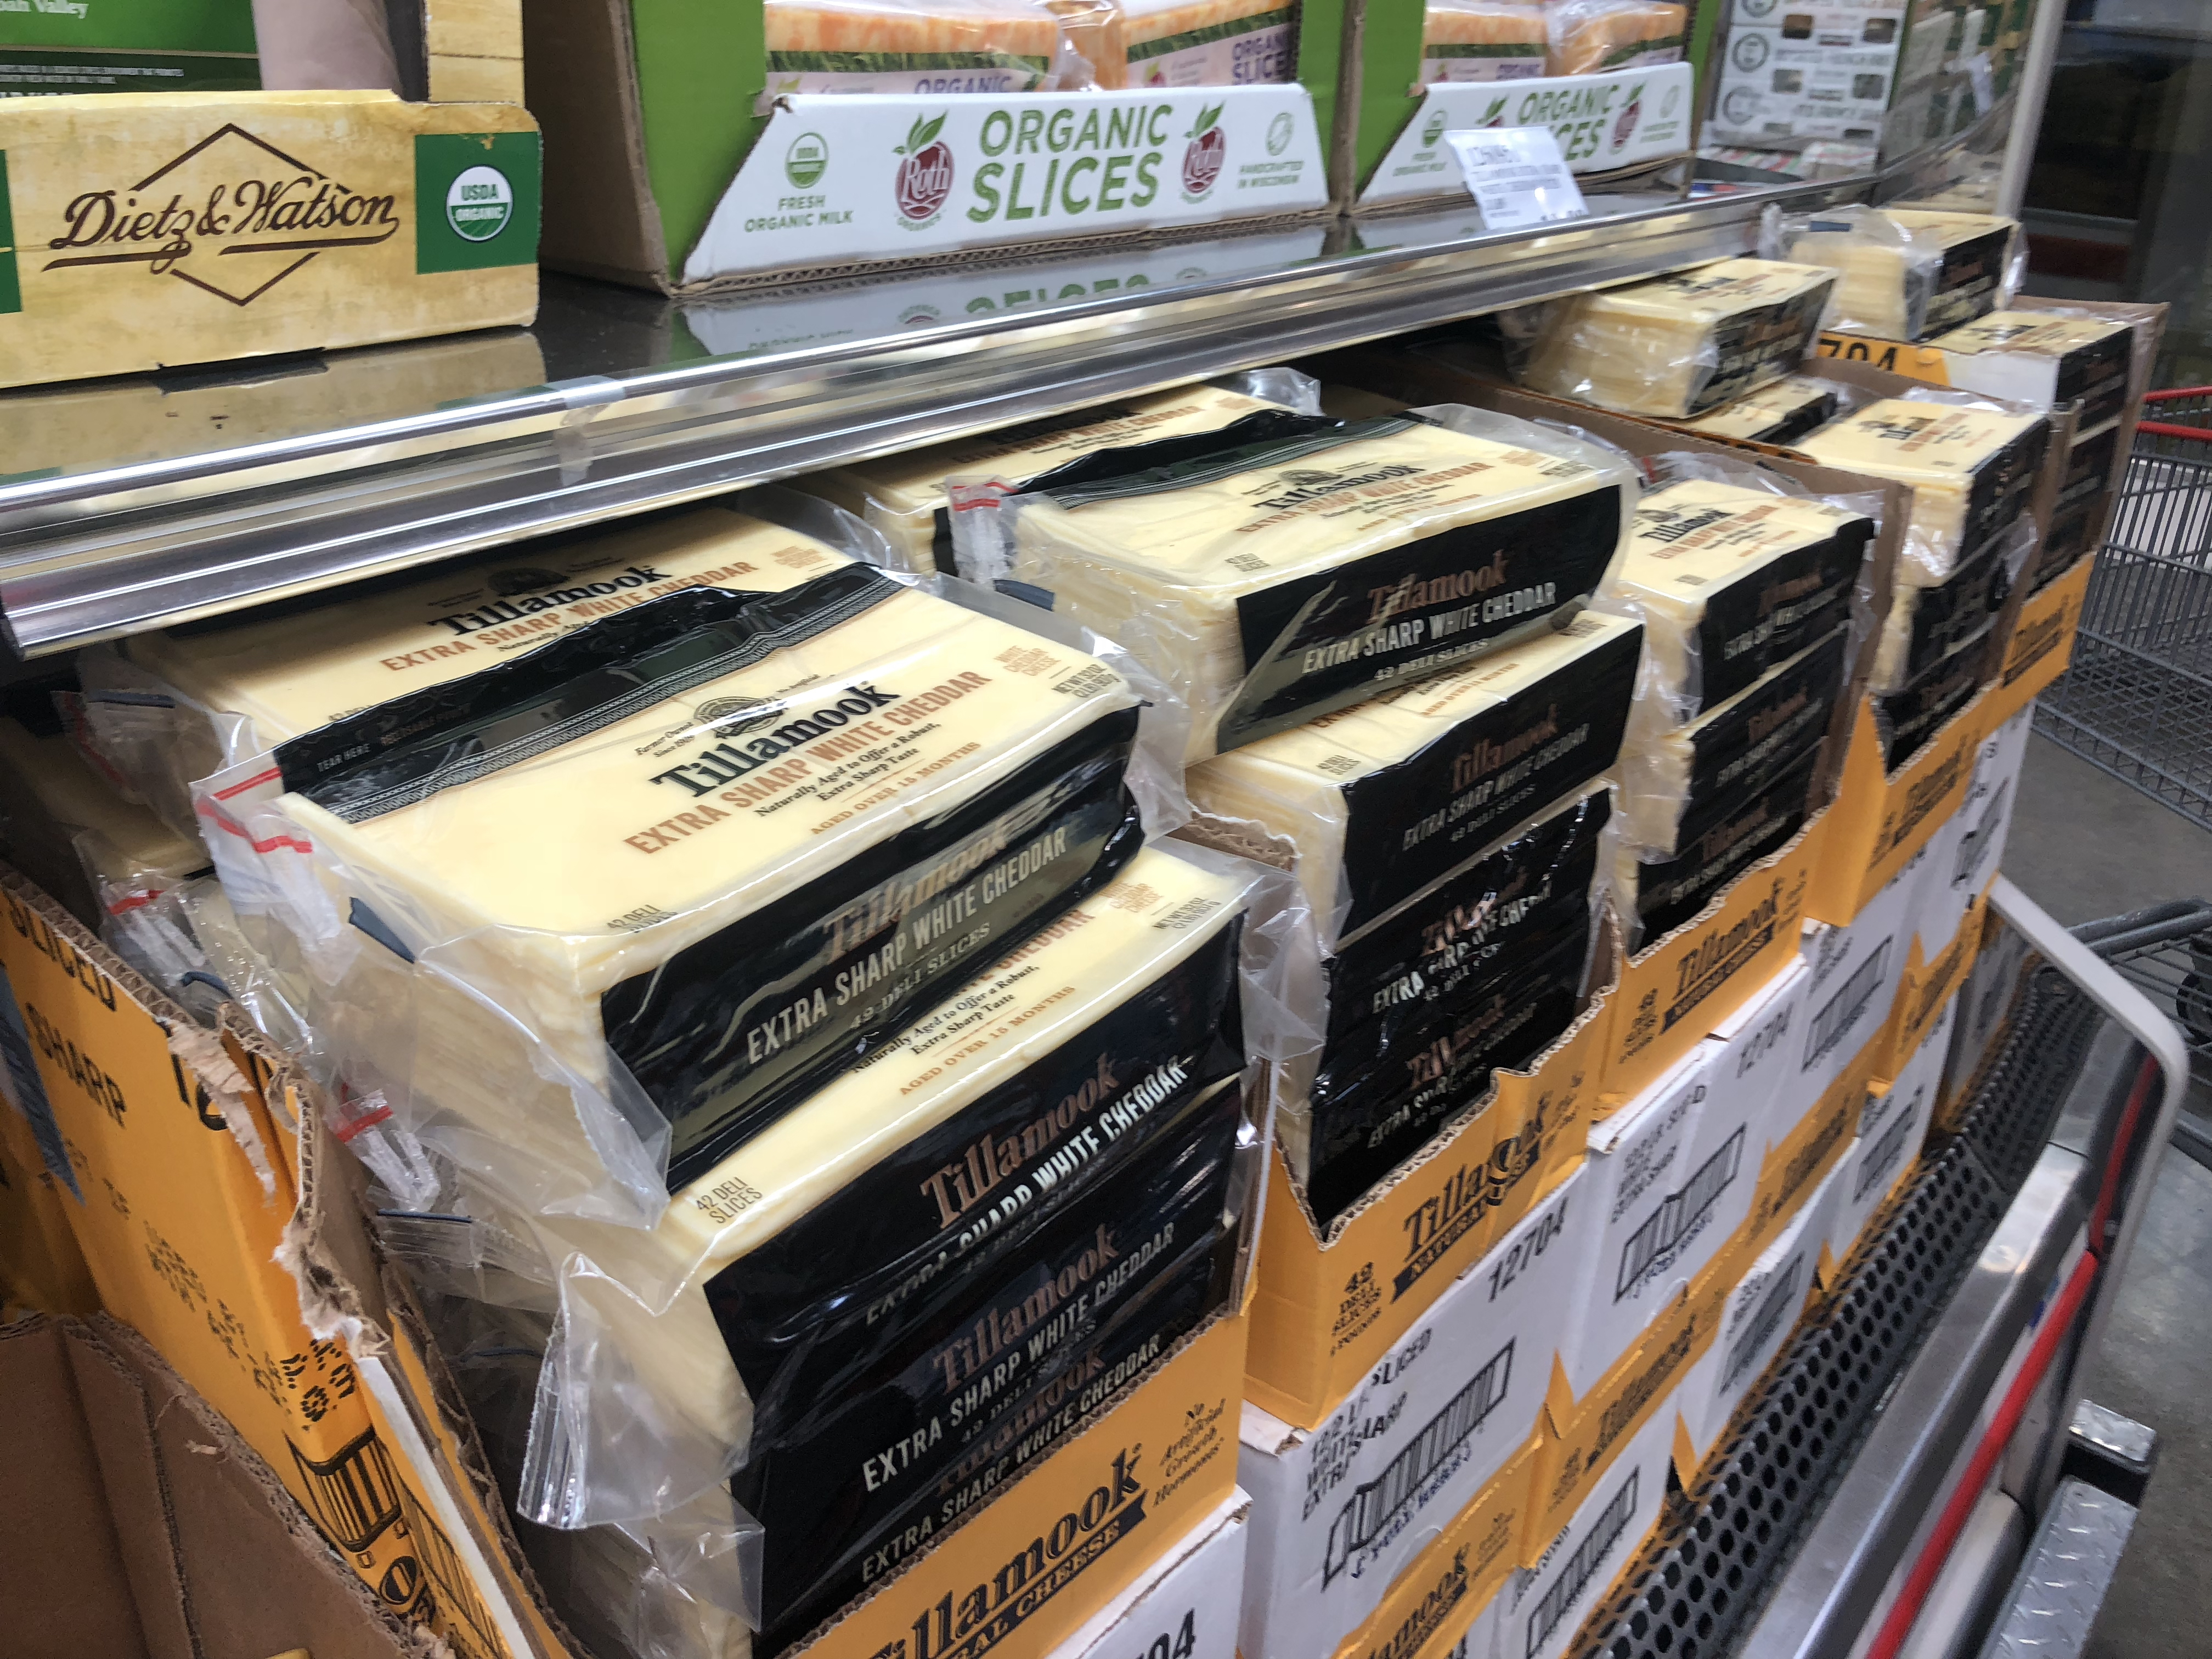 October 2018 keto Costco deals – Tillamook cheese at Costco